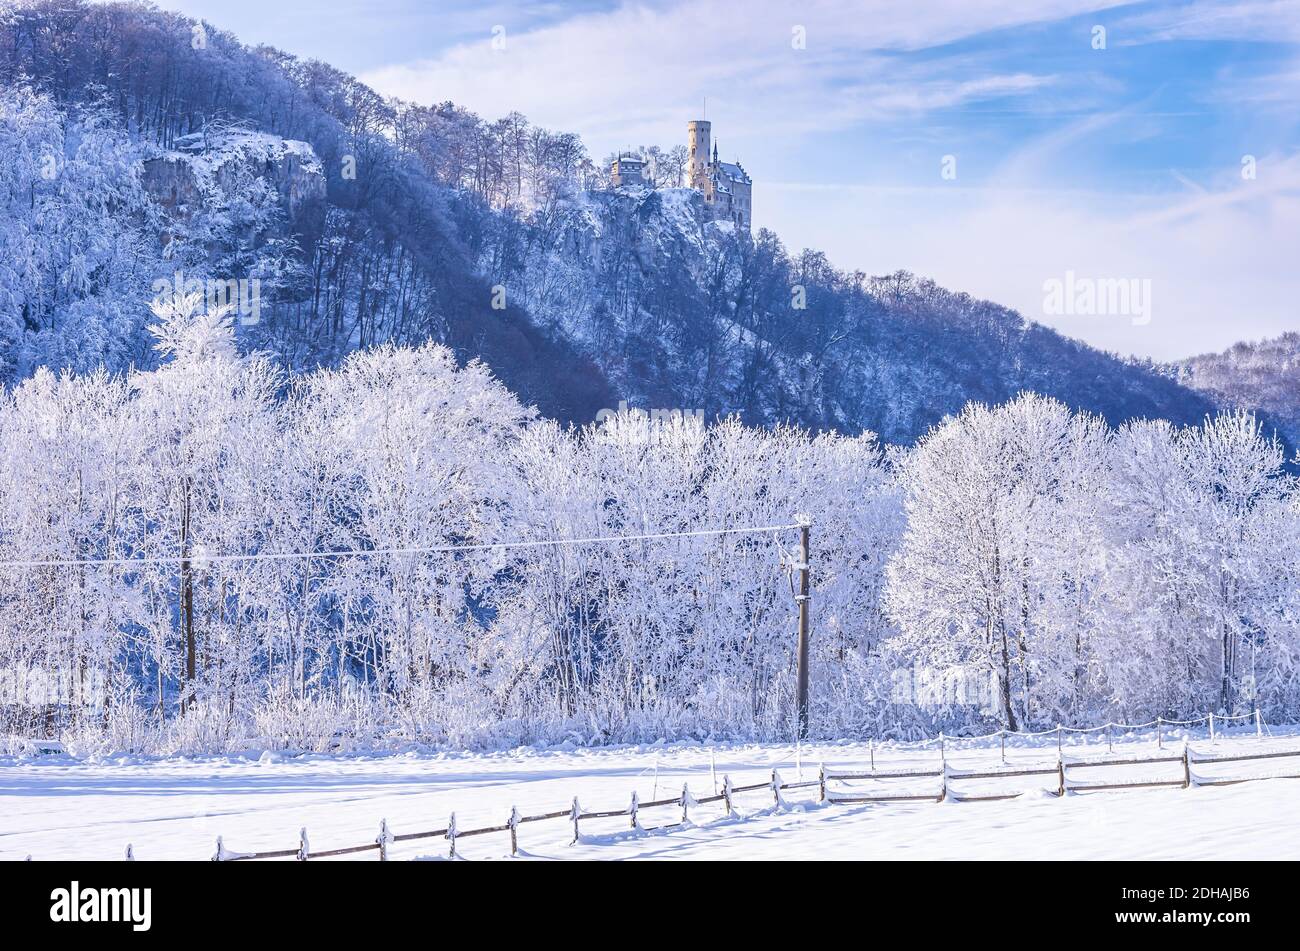 Winterly Lichtenstein Castle in snowy landscape, Honau, municipality of Lichtenstein near Reutlingen, Swabian Alb, Germany. Stock Photo